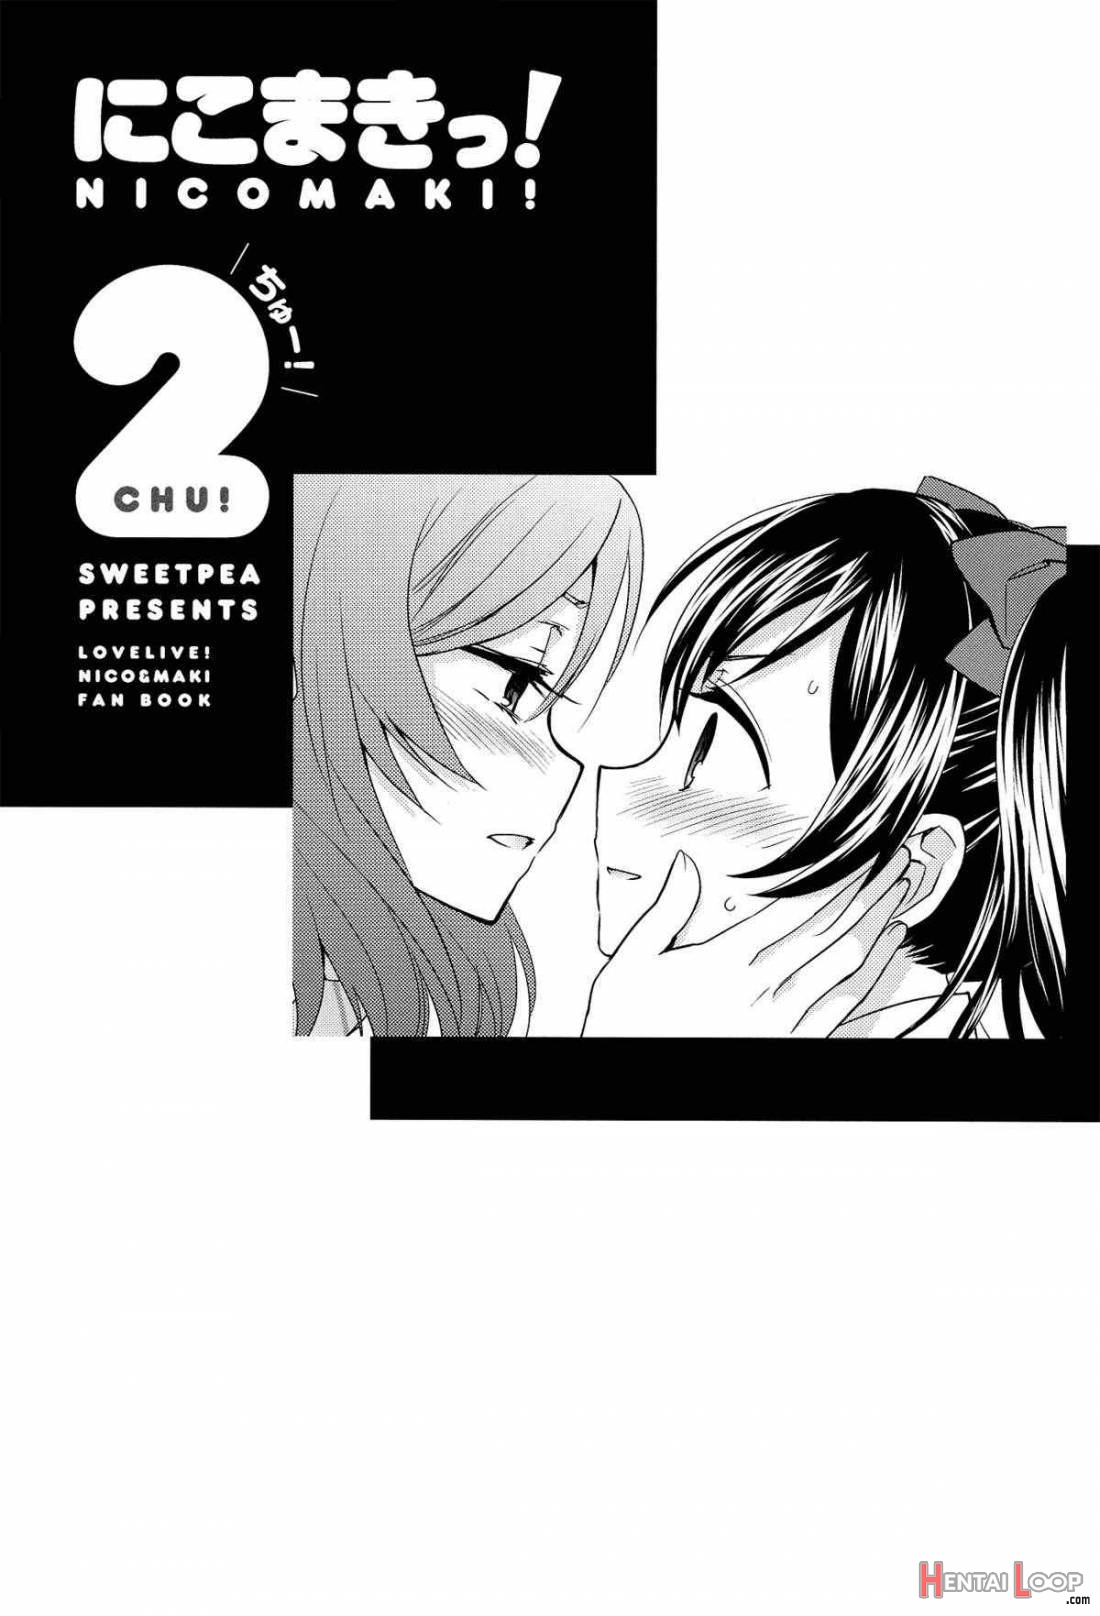 Read Nico Maki! 2 (by Ooshima Tomo) - Hentai doujinshi for free at  HentaiLoop